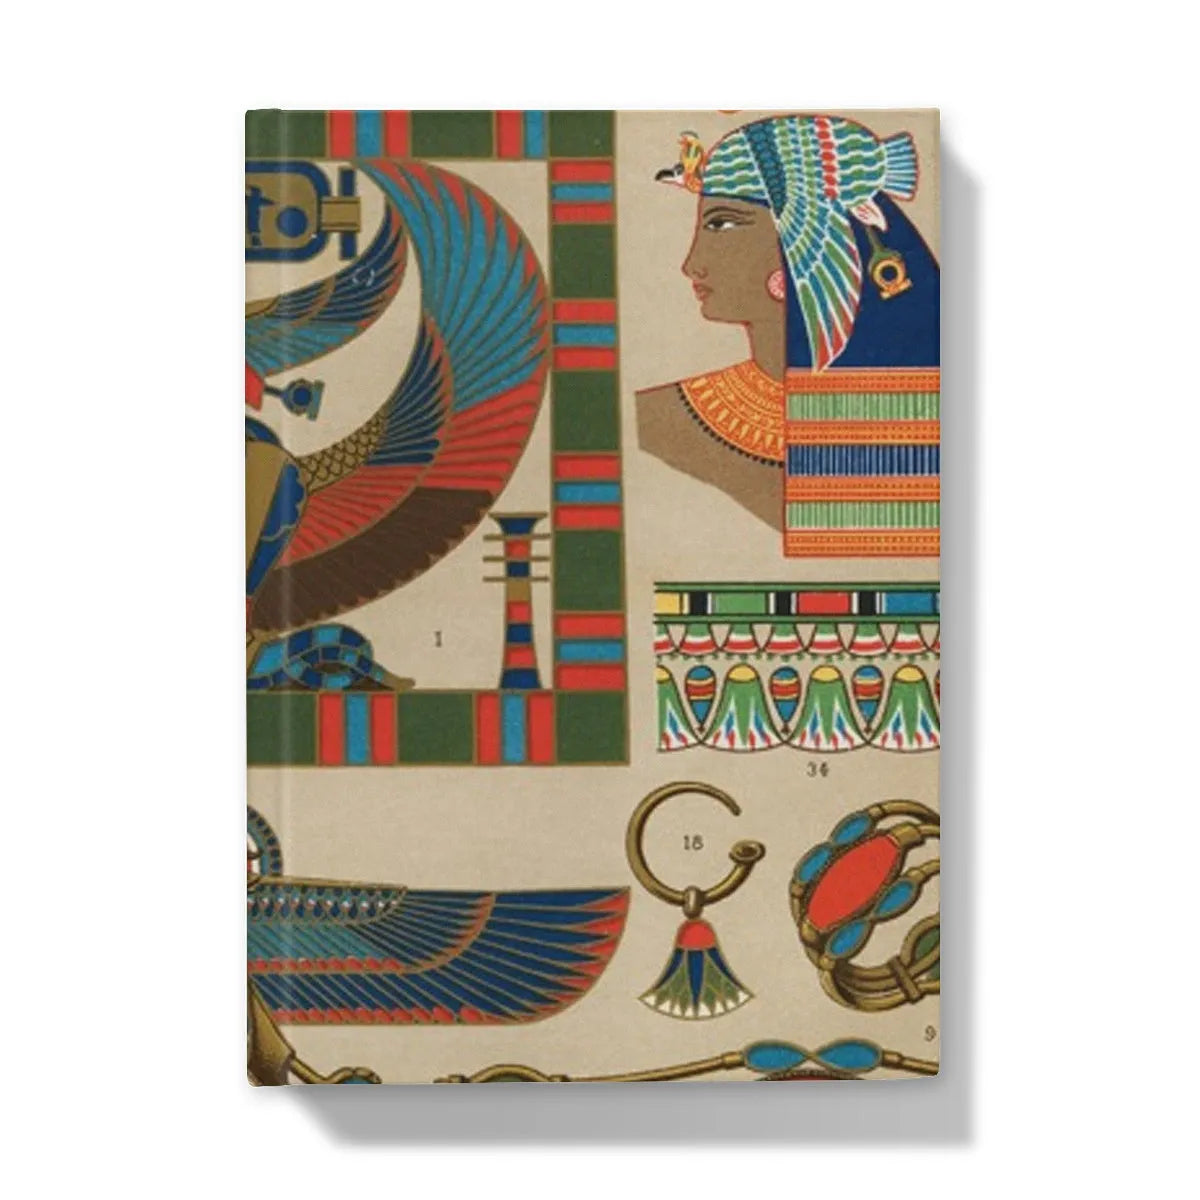 Egyptian Pattern By Auguste Racinet Hardback Journal - 5’x7’ / Lined - Notebooks & Notepads - Aesthetic Art